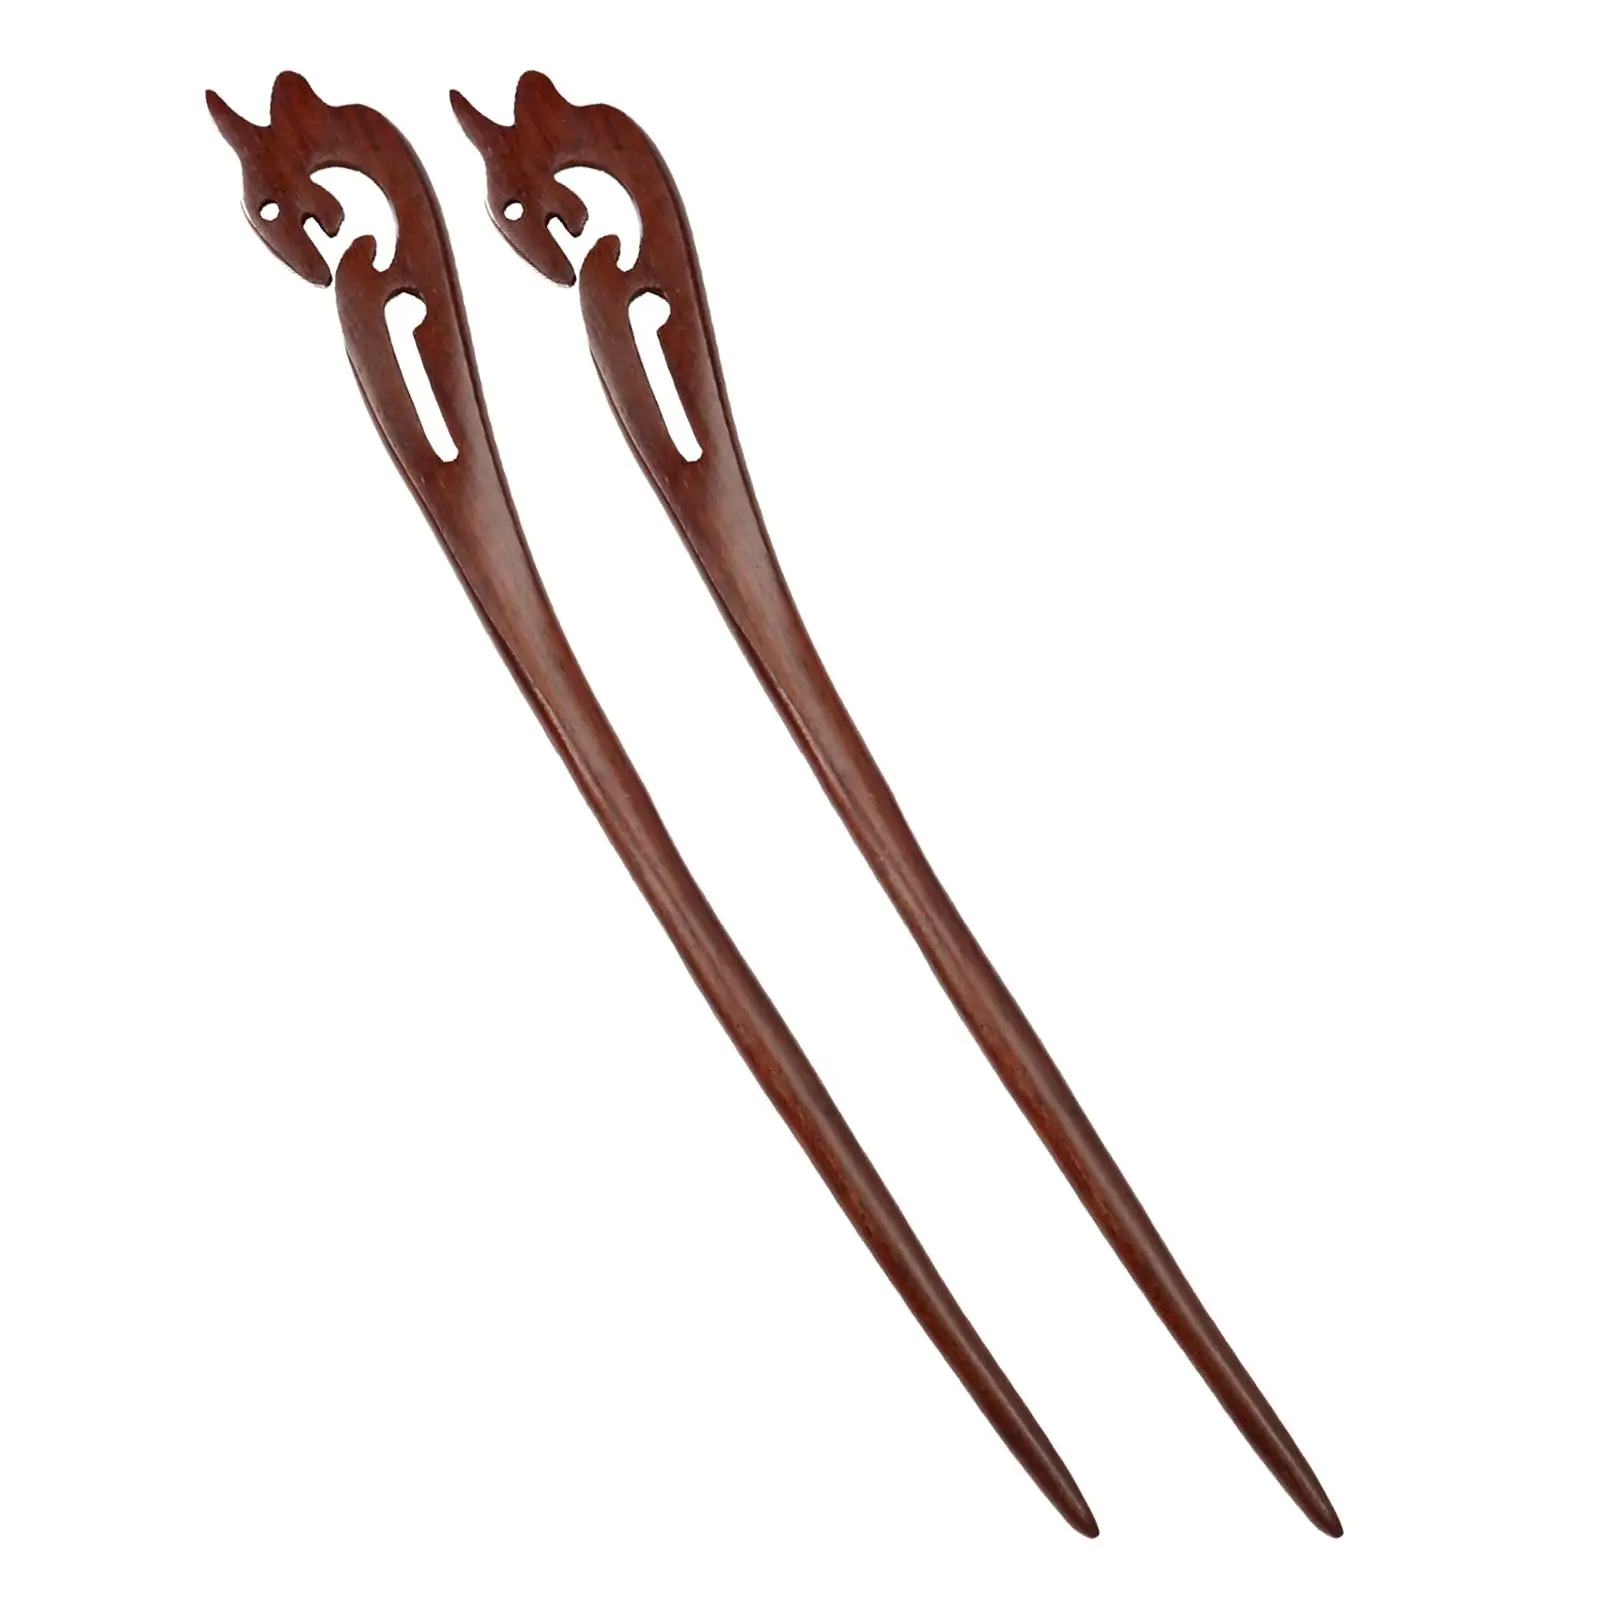 Hair Chopsticks Hairpin Novelty Wooden Hair Stick for Daily Activities Gift